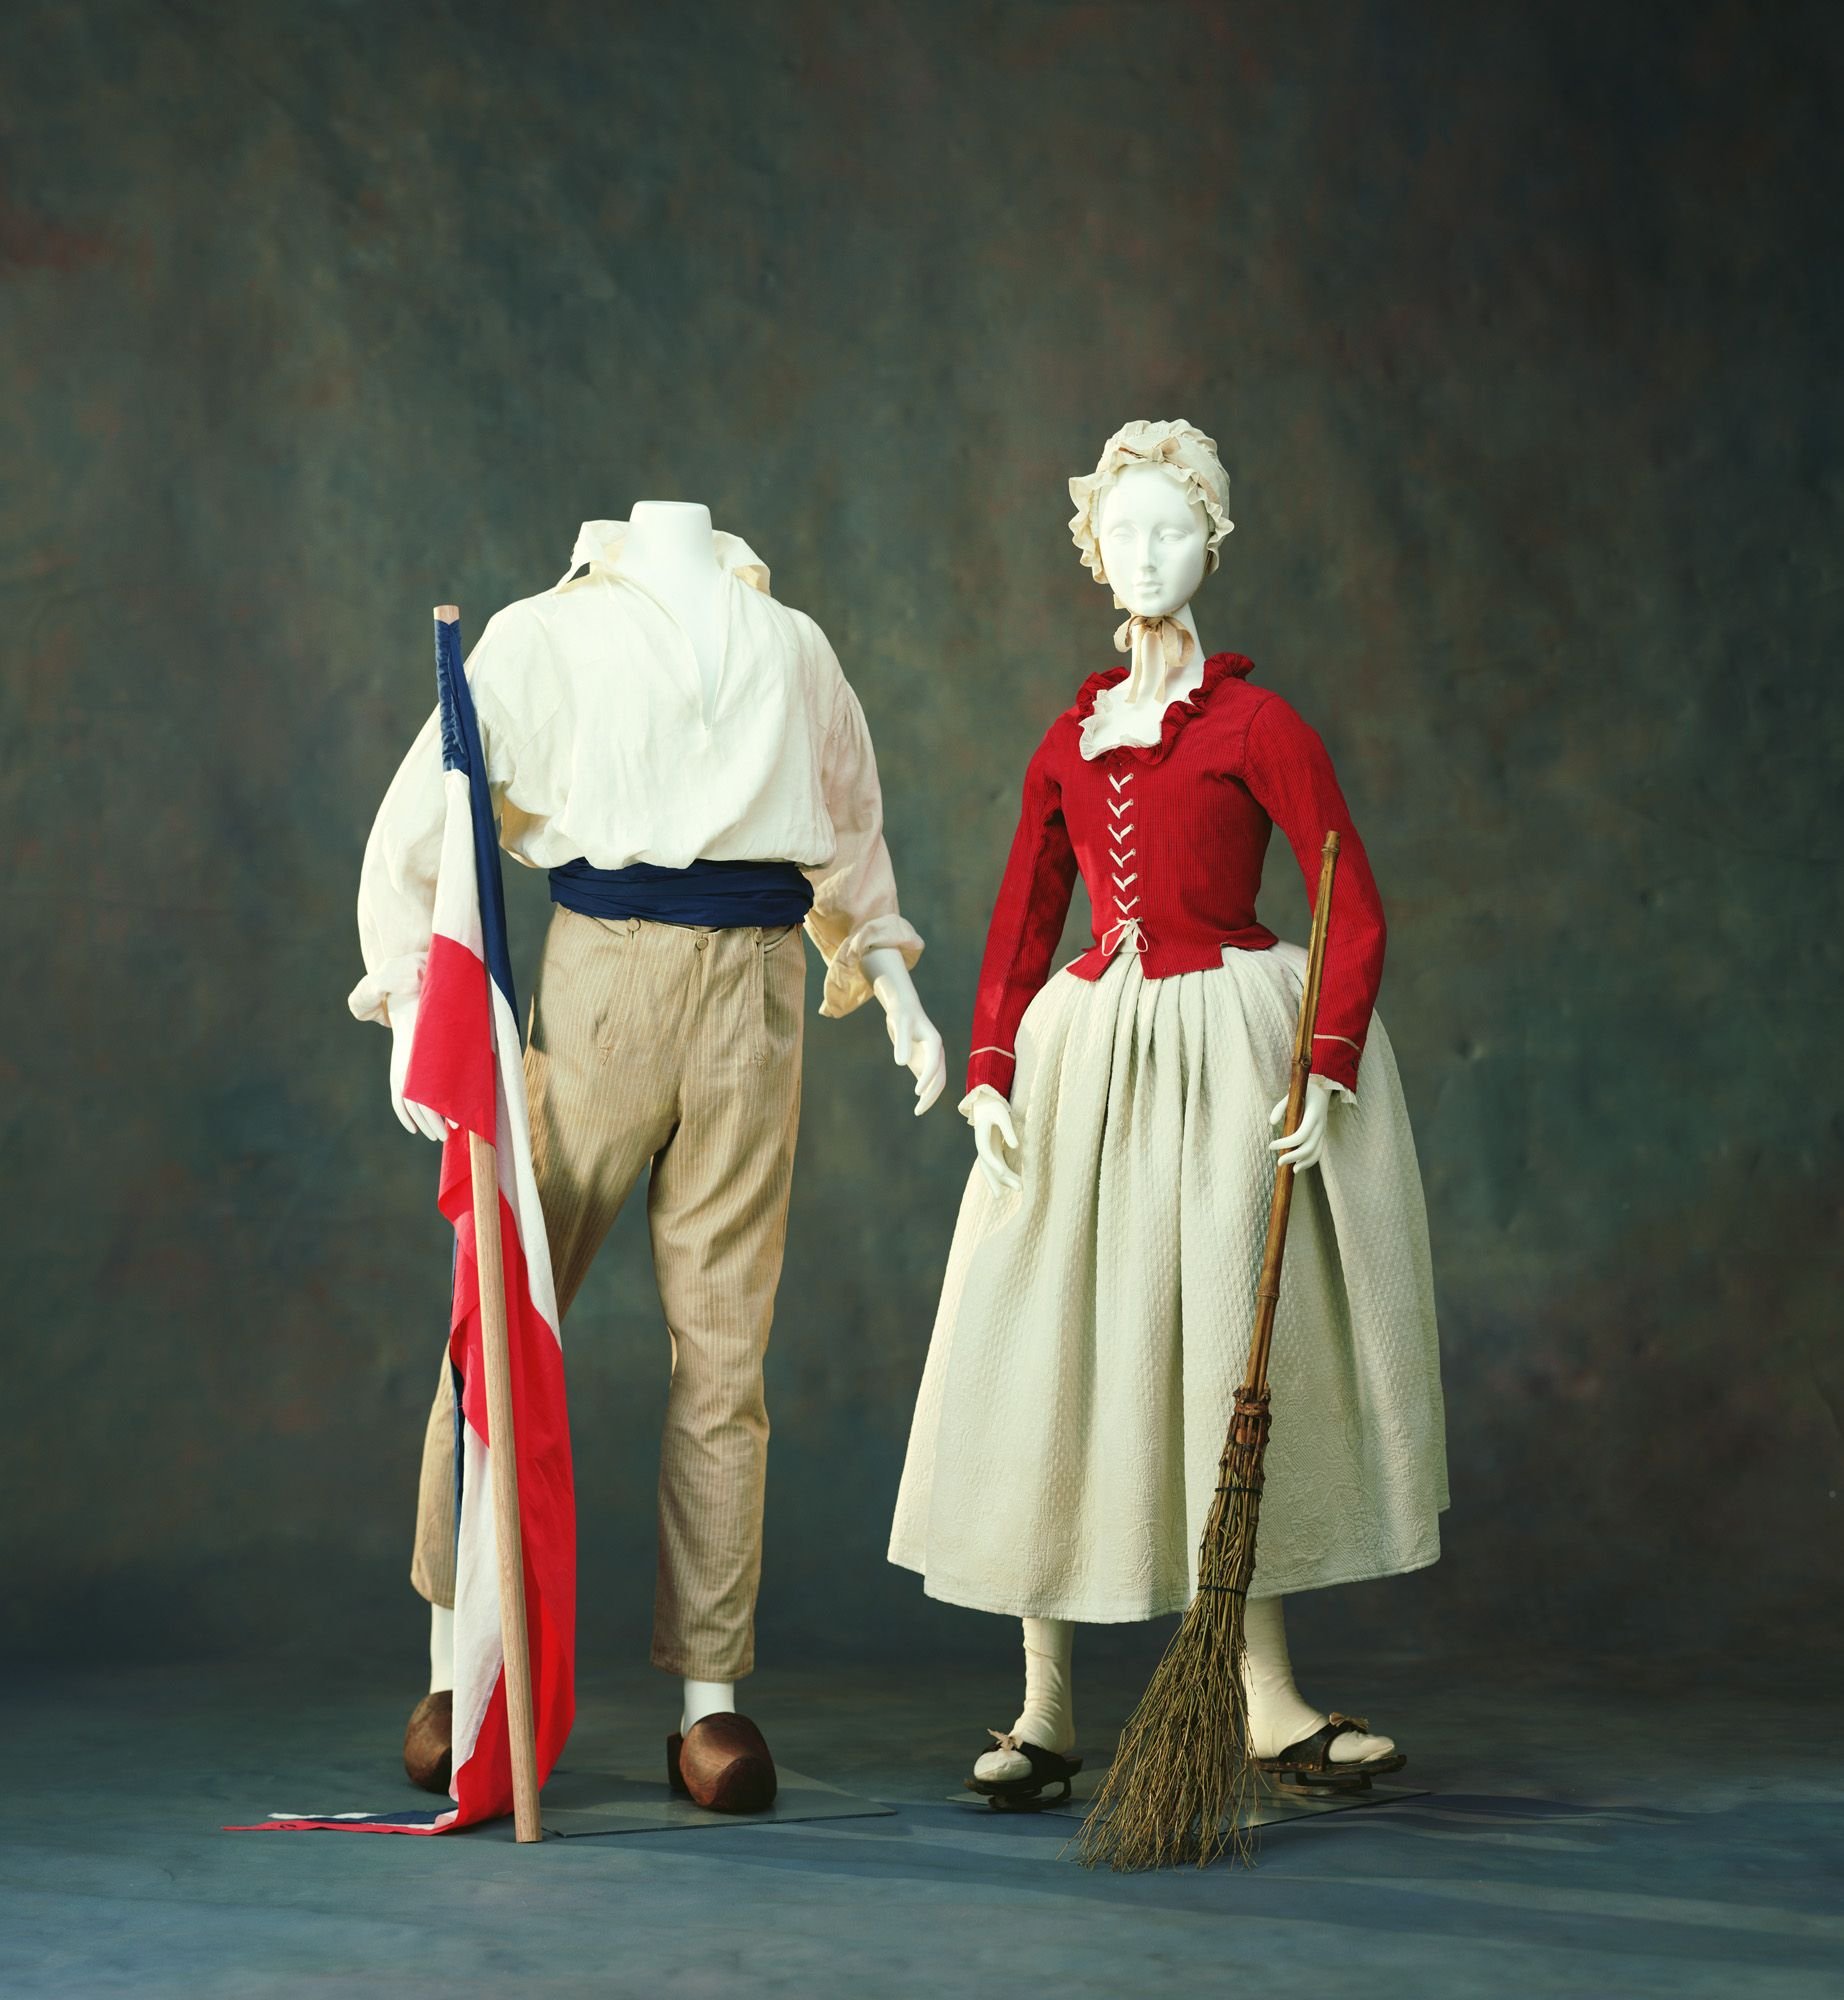 French 18. Одежда французская революция 1789. Мода 1789 — 1794 во Франции. Мода французской революции 18 века. Роялисты во Франции 1789 костюм.